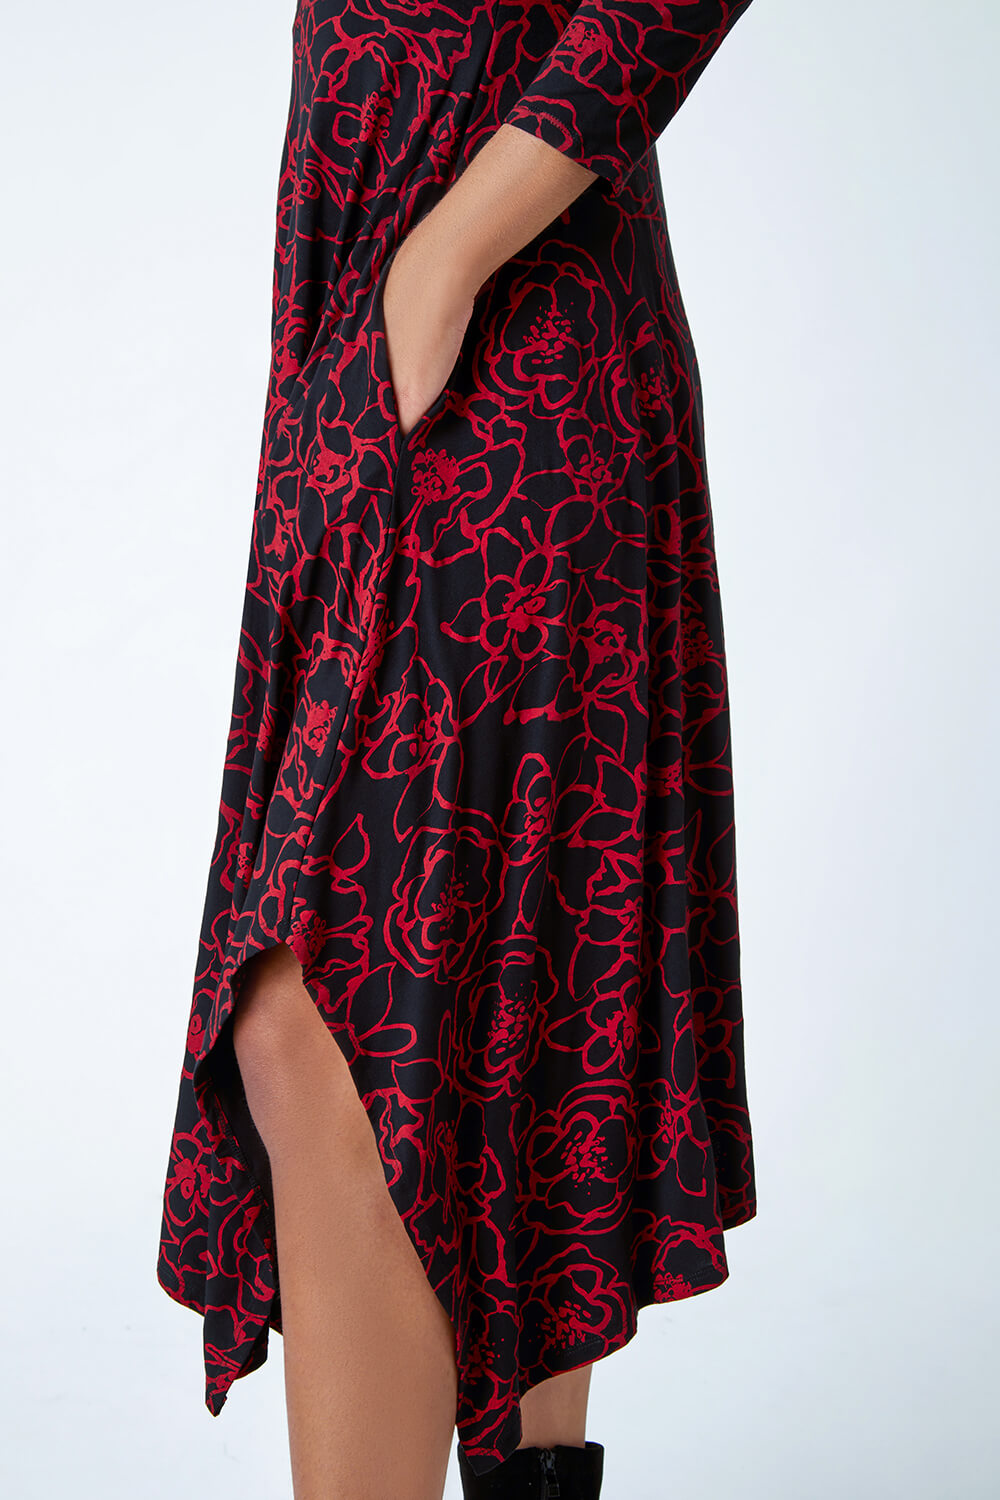 Red Floral Print Pocket Midi Stretch Dress, Image 5 of 5